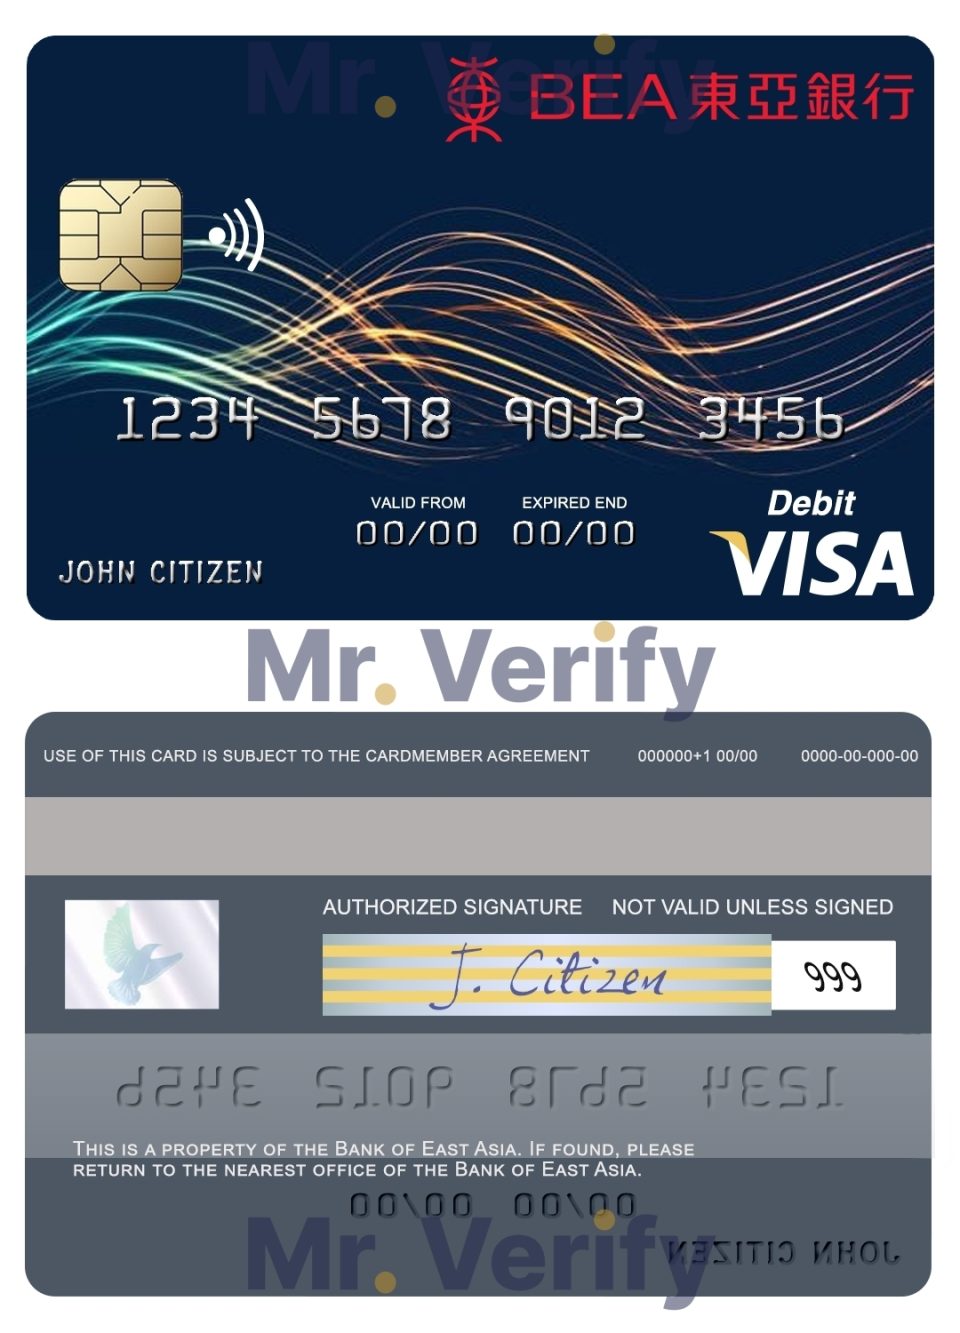 Editable Hong Kong Bank of East Asia visa card Templates in PSD Format